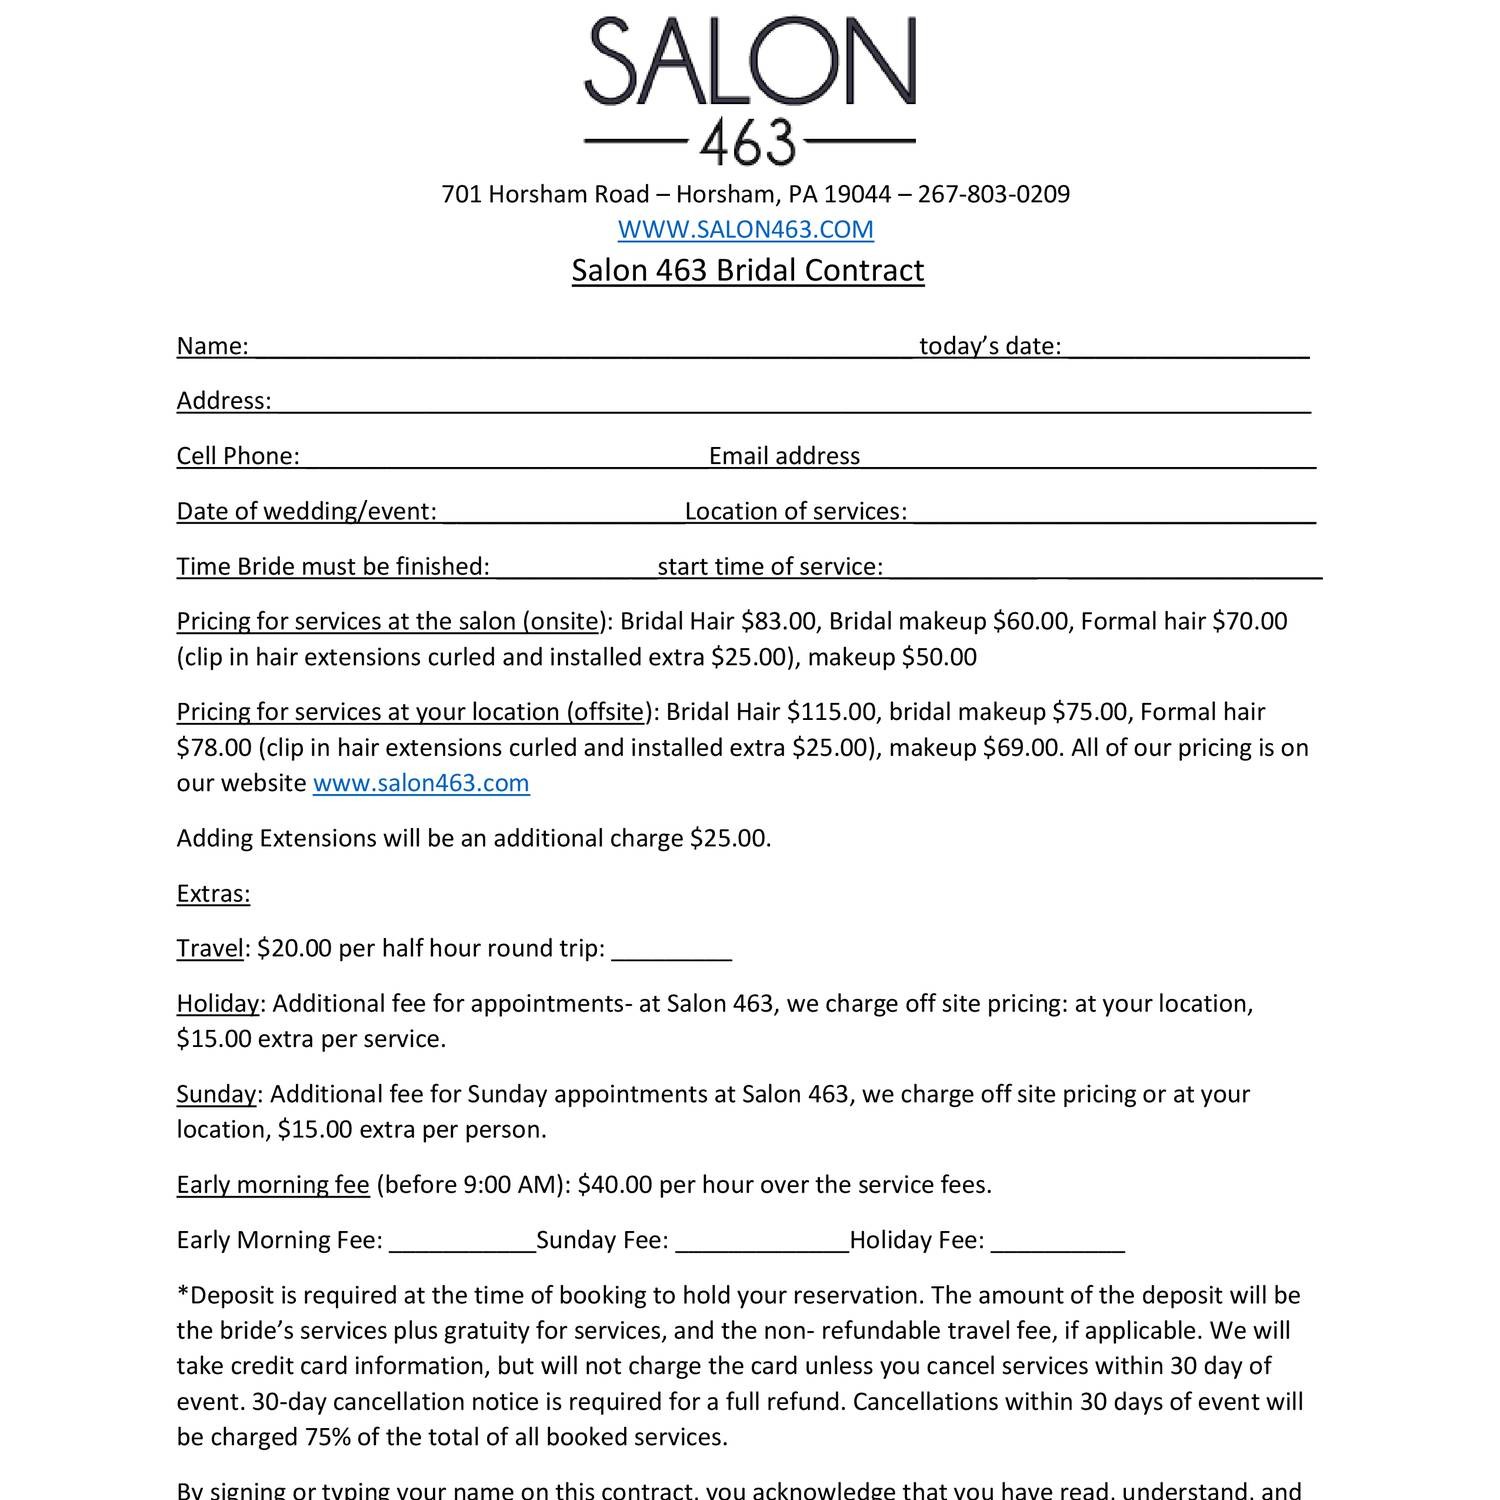 Salon 463 Bridal Contract.docx DocDroid